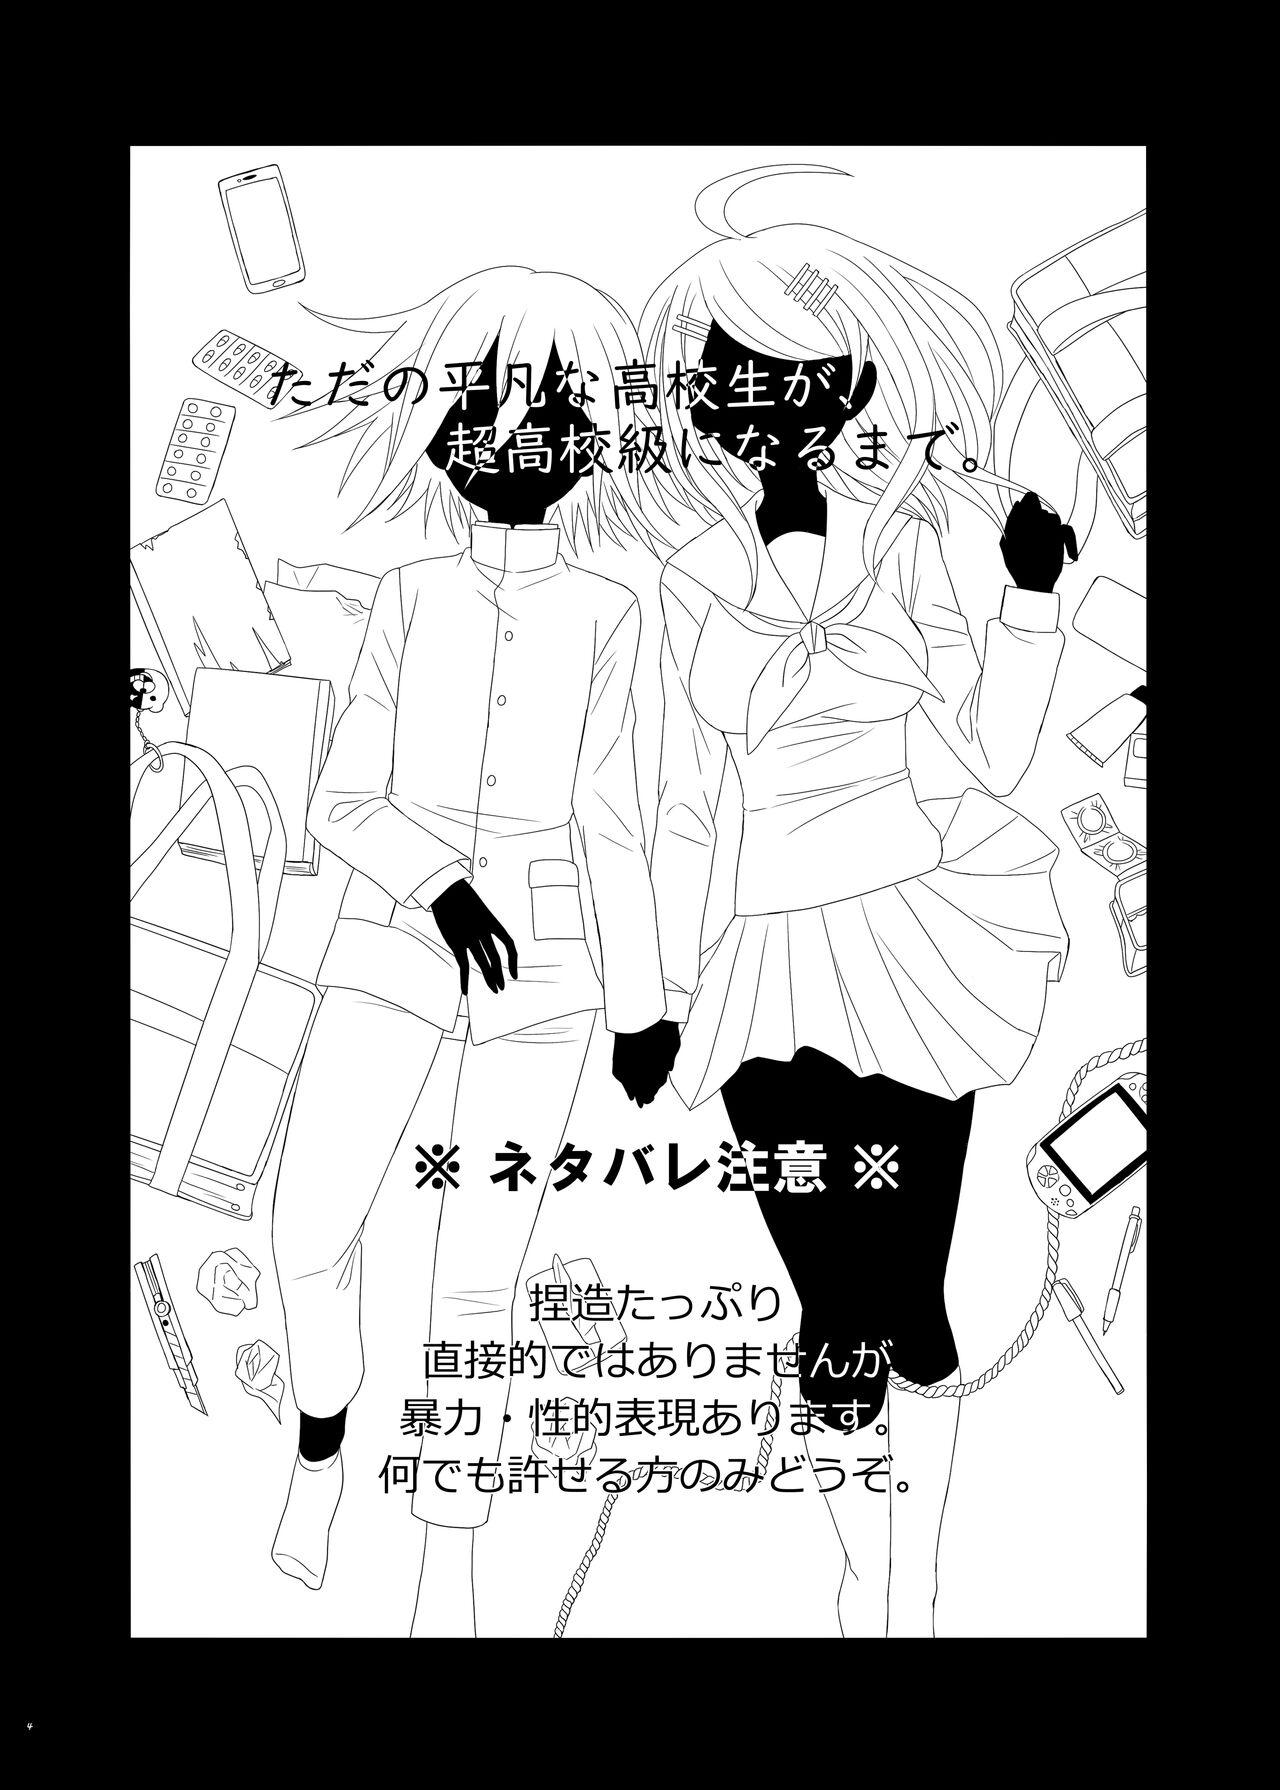 Analplay Purorougu Ouaka No Manga - Danganronpa Toilet - Page 3